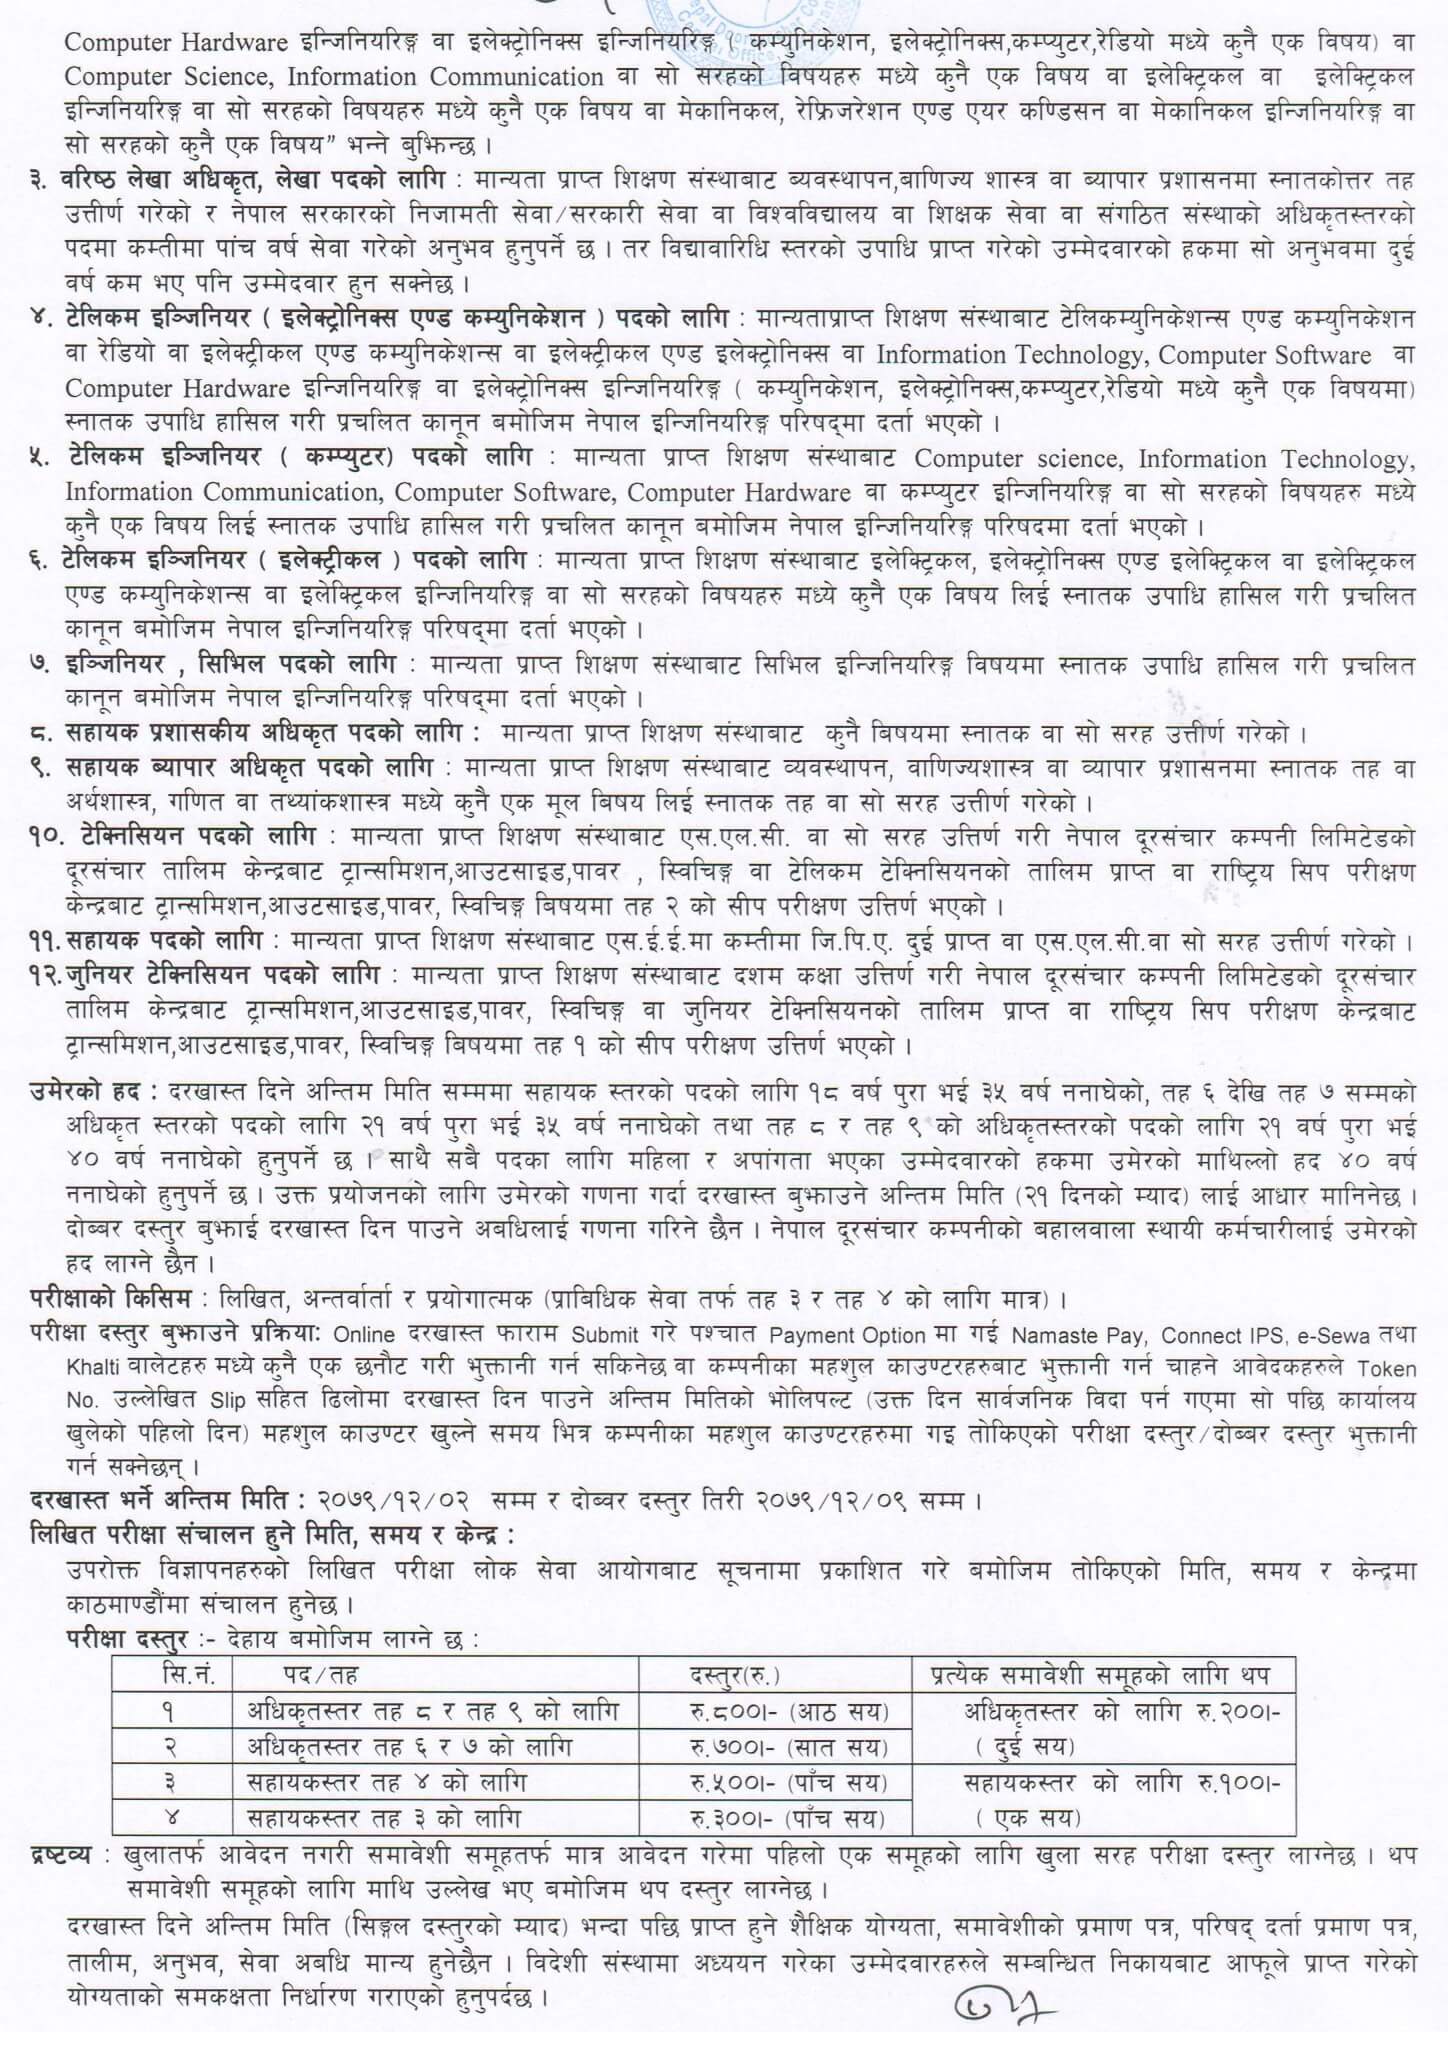 Nepal Telecom Vacancy for Various Post